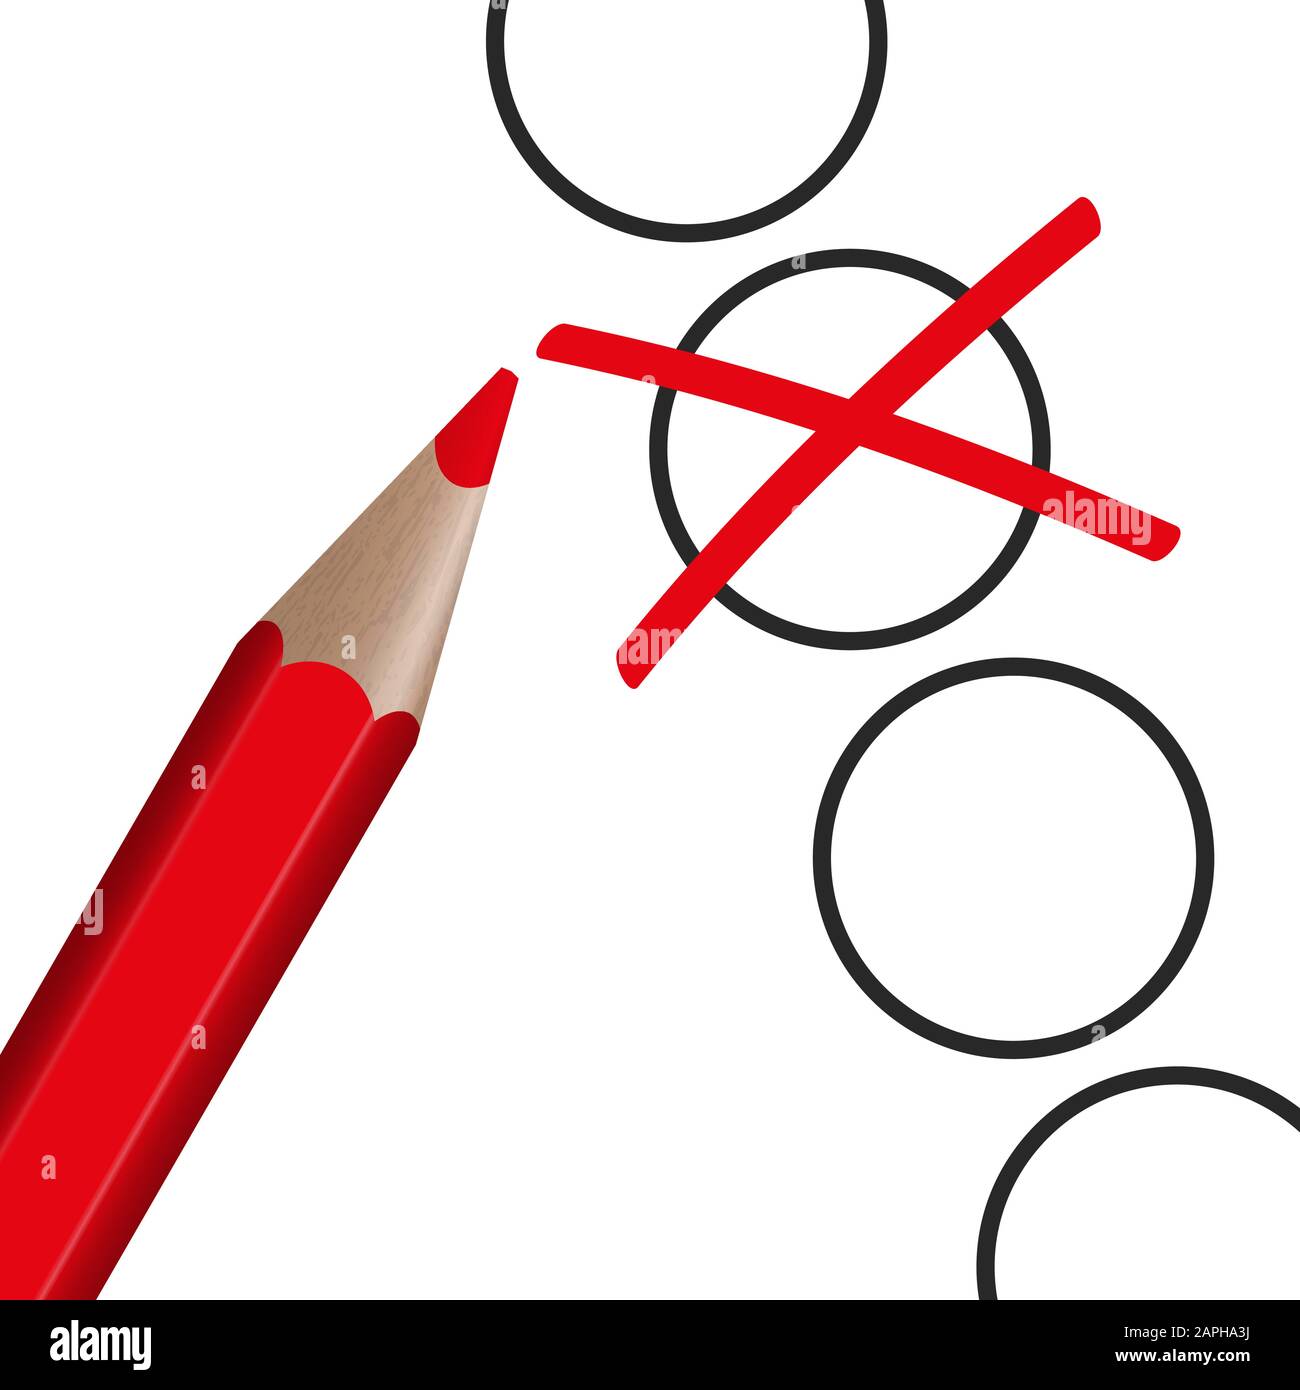 Roter Stift mit Kreuz für Wahlsymbolik Stock Vektor